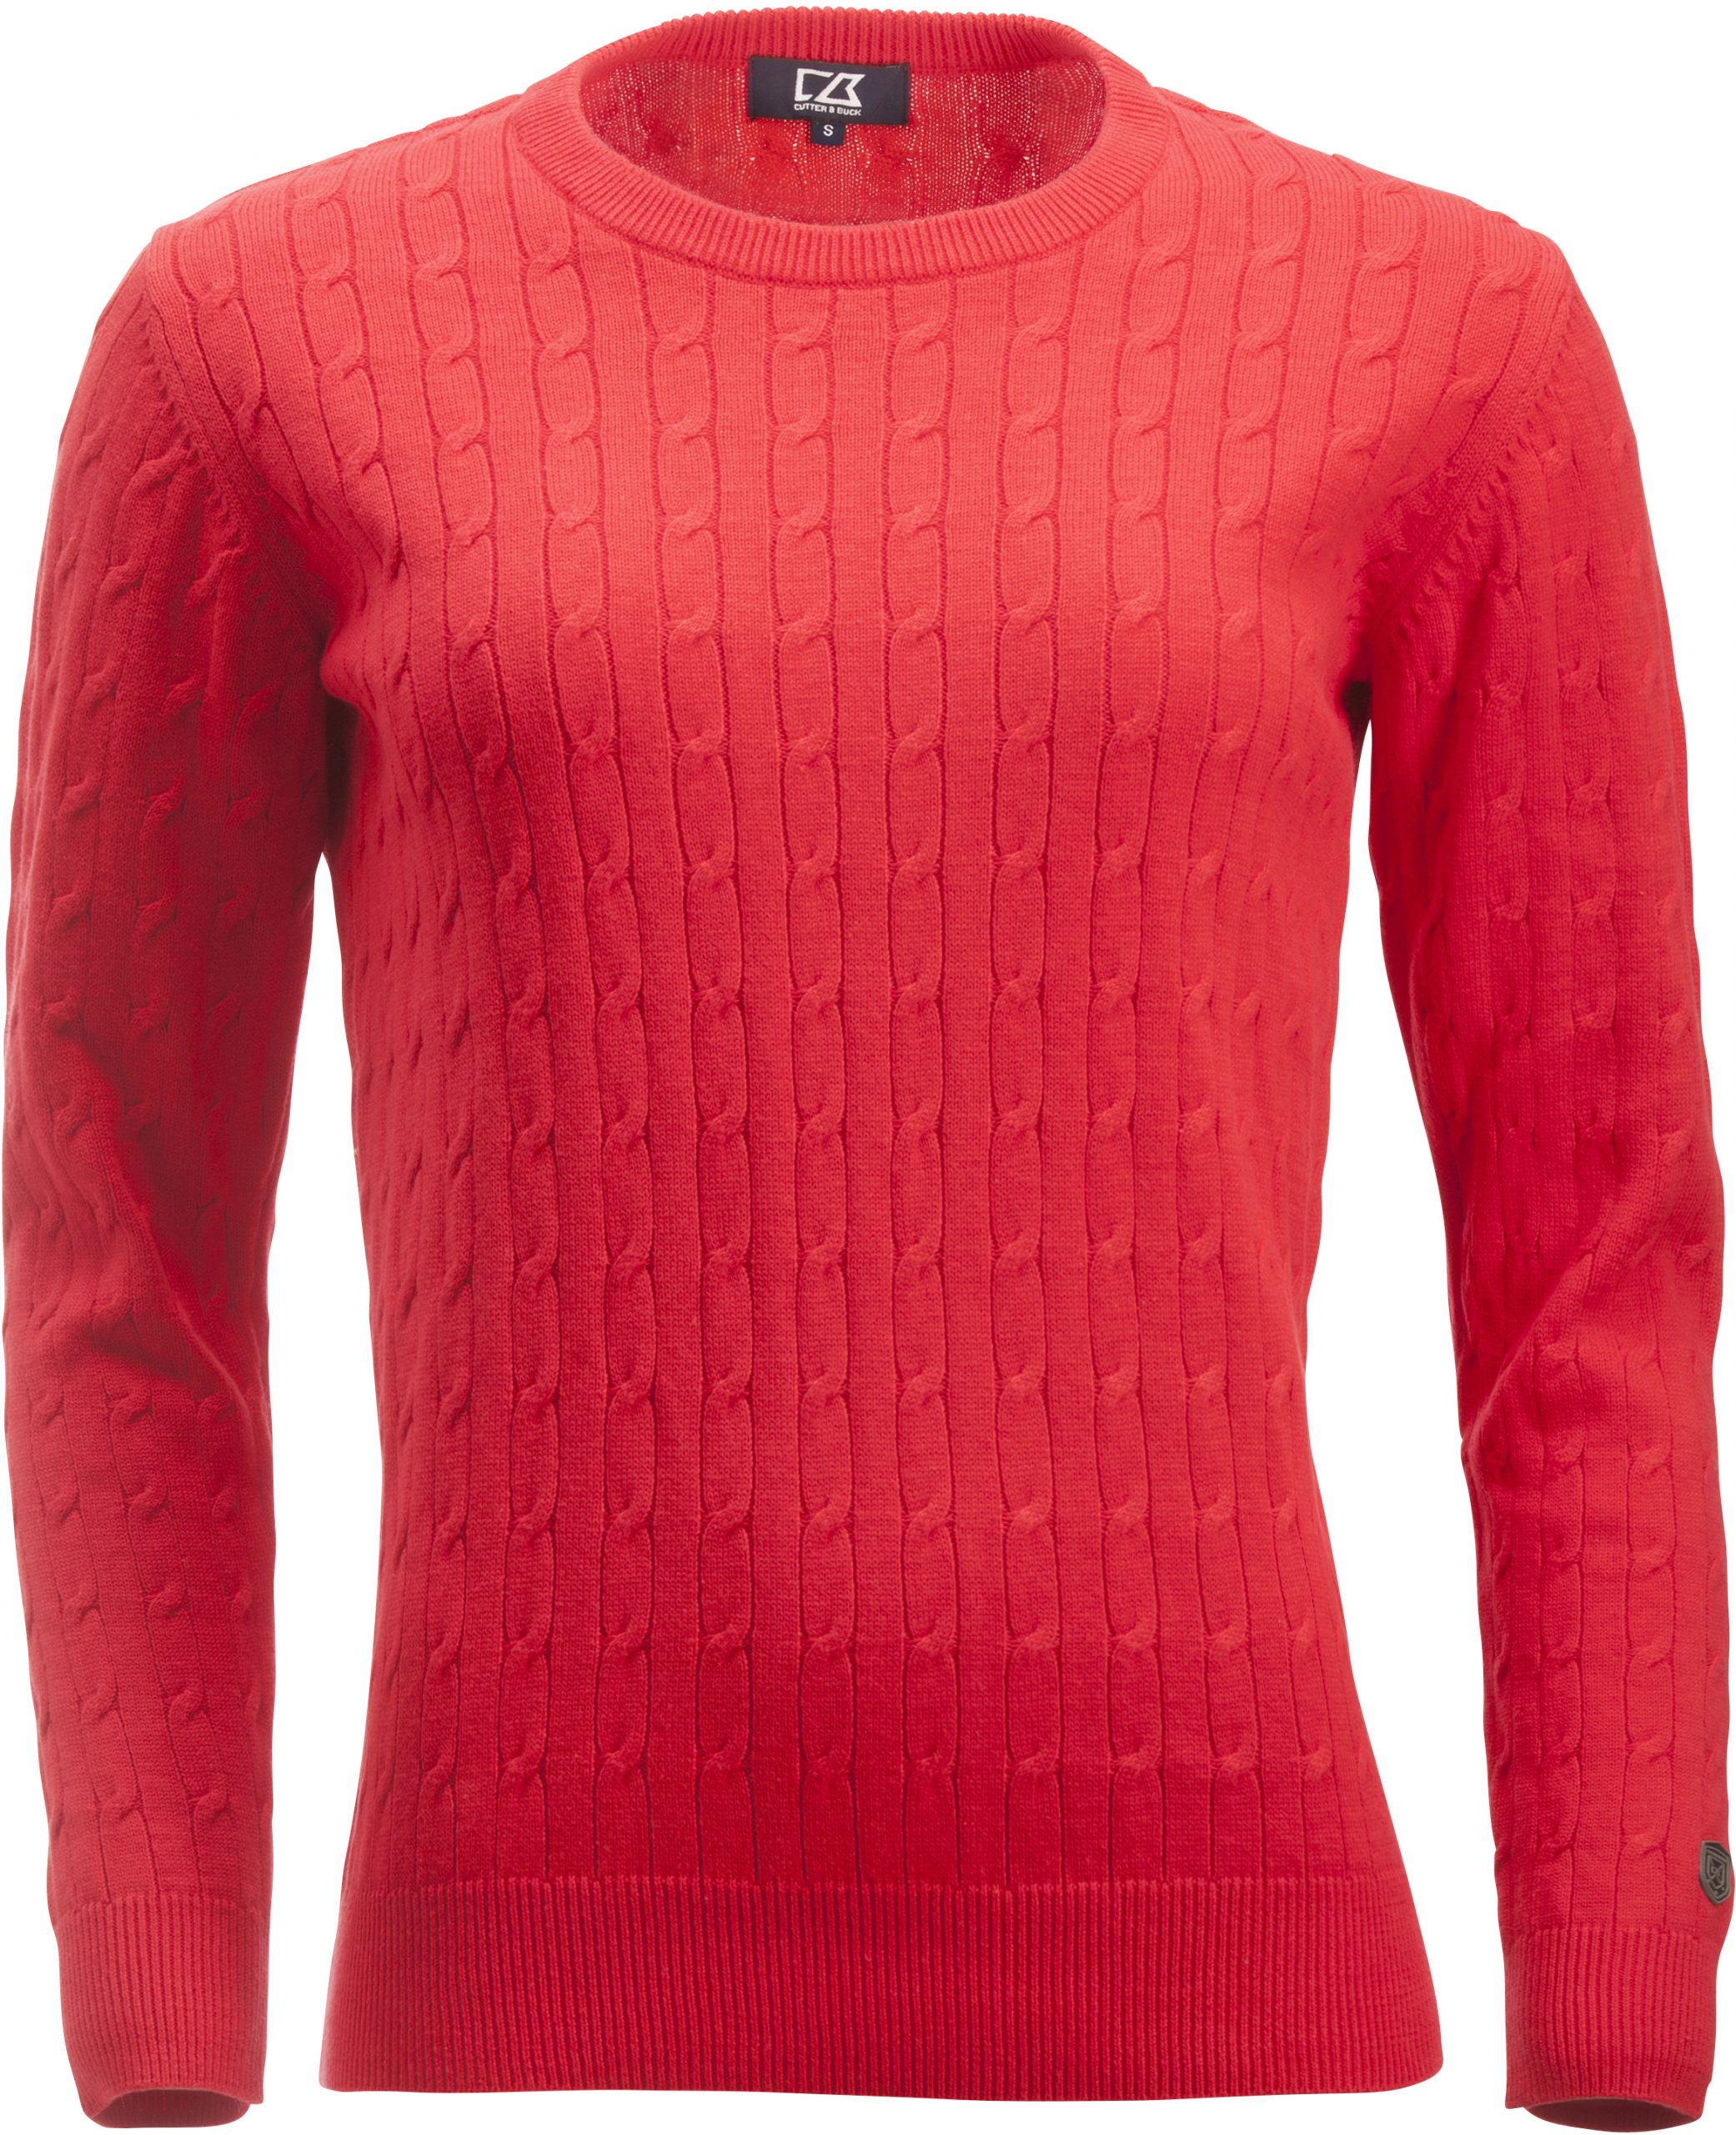 Cutterandbuck Blakely Knitted Sweater Ladies' Punainen